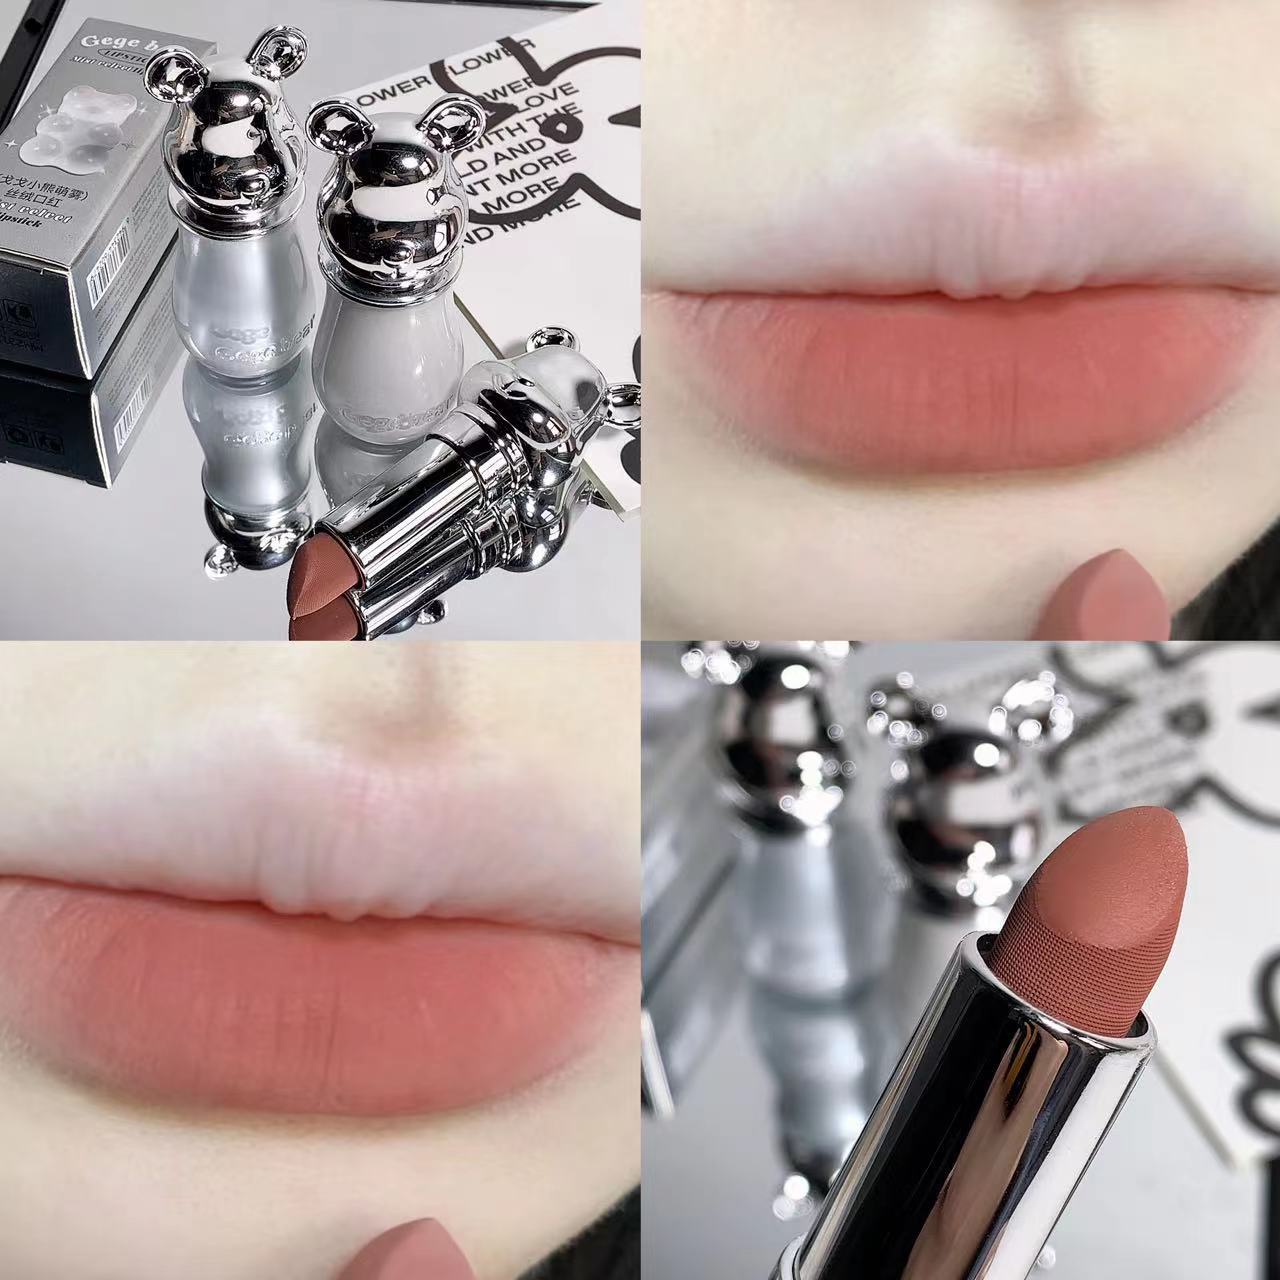 Common lipstick storage misunderstandings